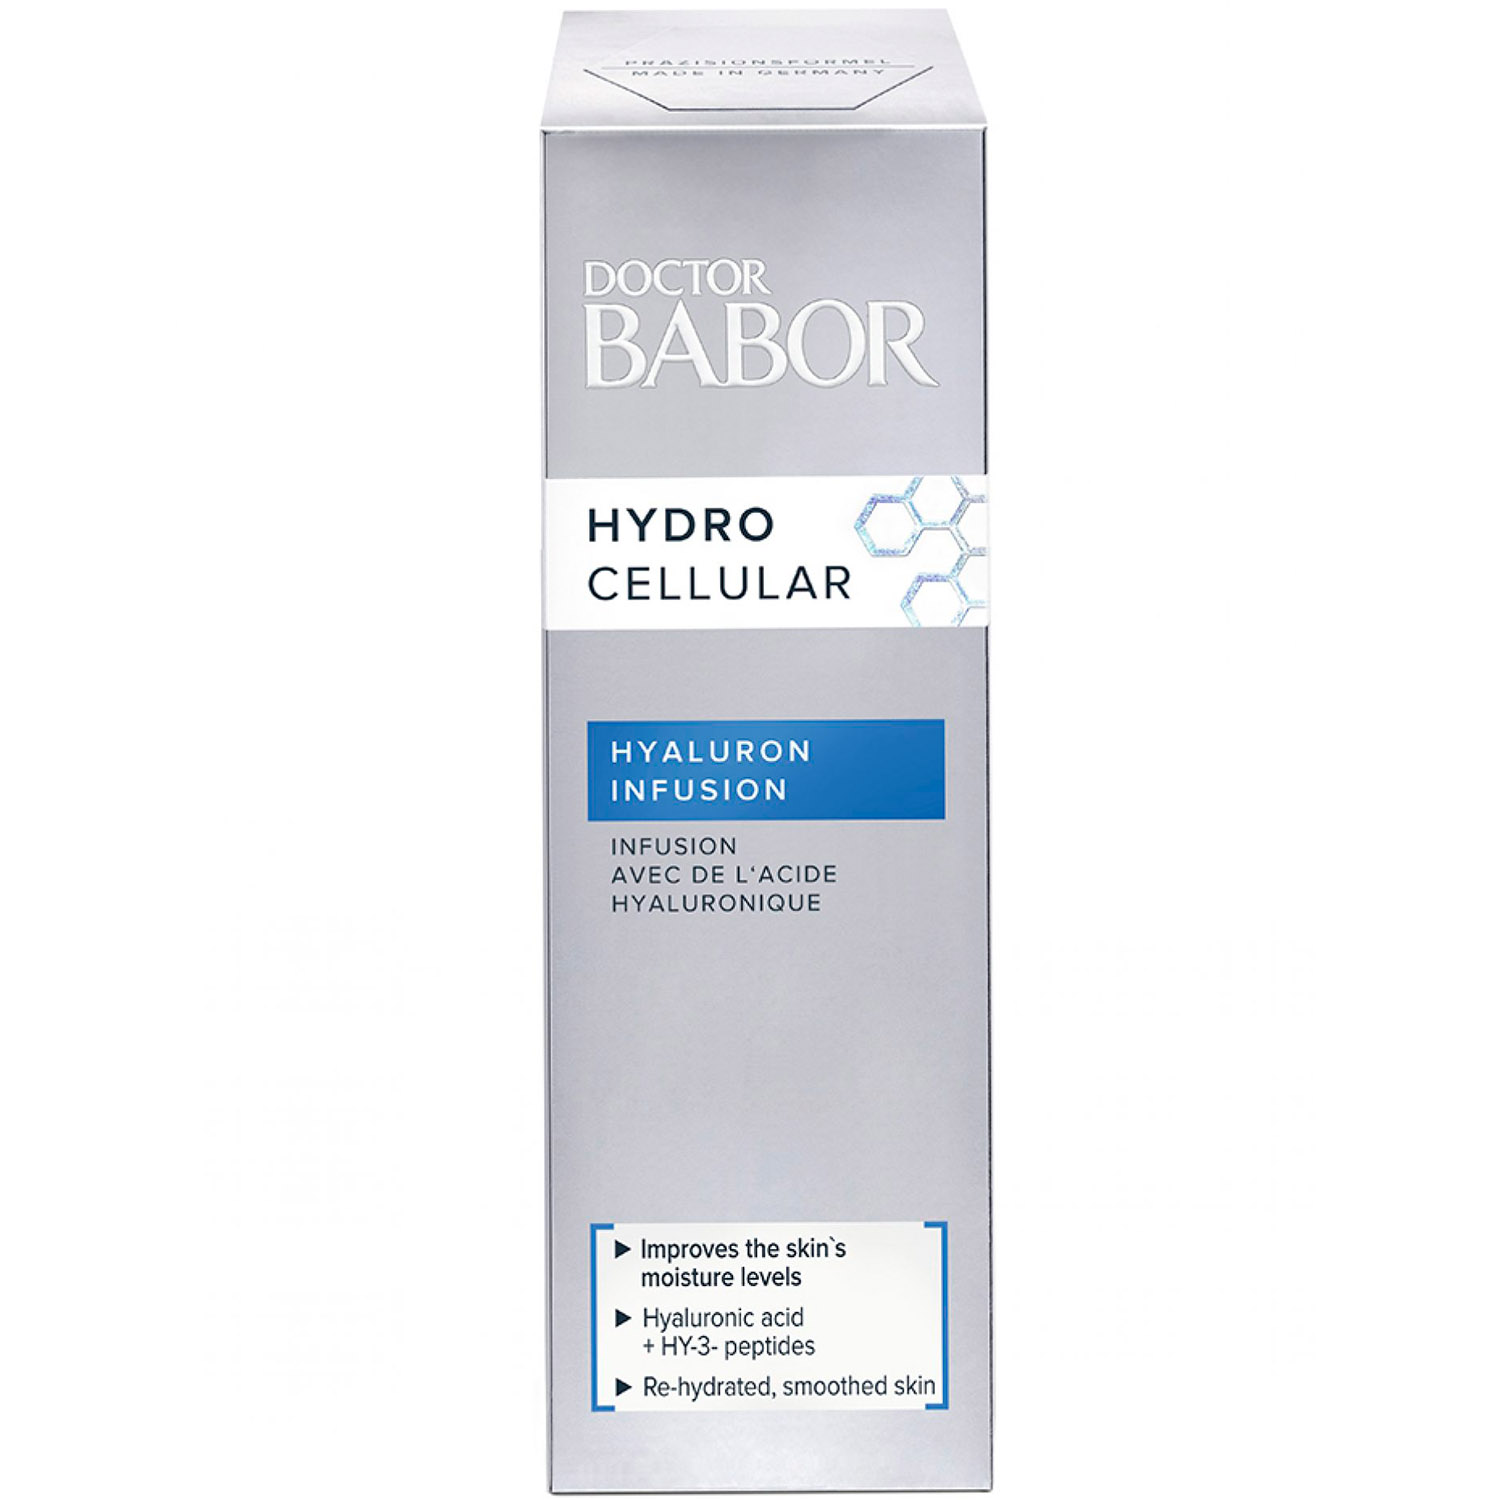 Сыворотка для лица Babor Doctor Babor Hydro Cellular Hyaluron Infusion увлажняющая, 50 мл - фото 2